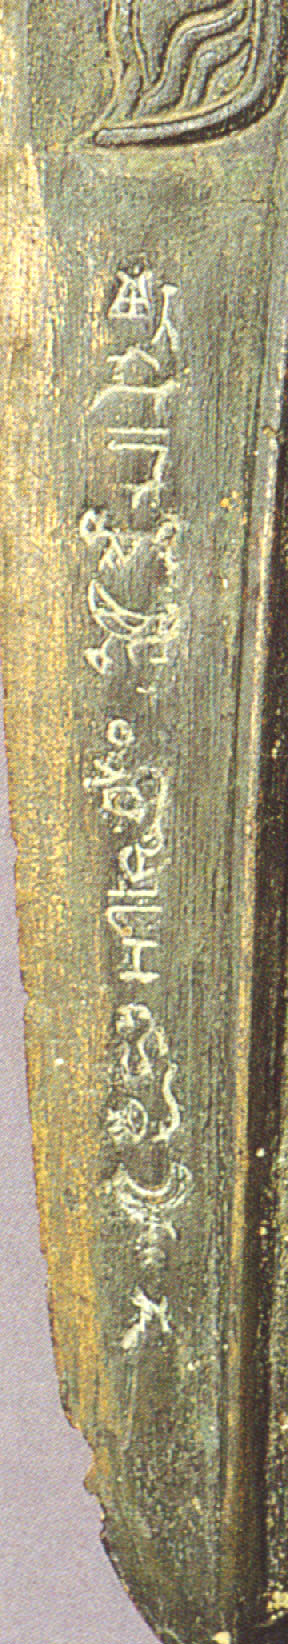 A Ba-Shu Inscription